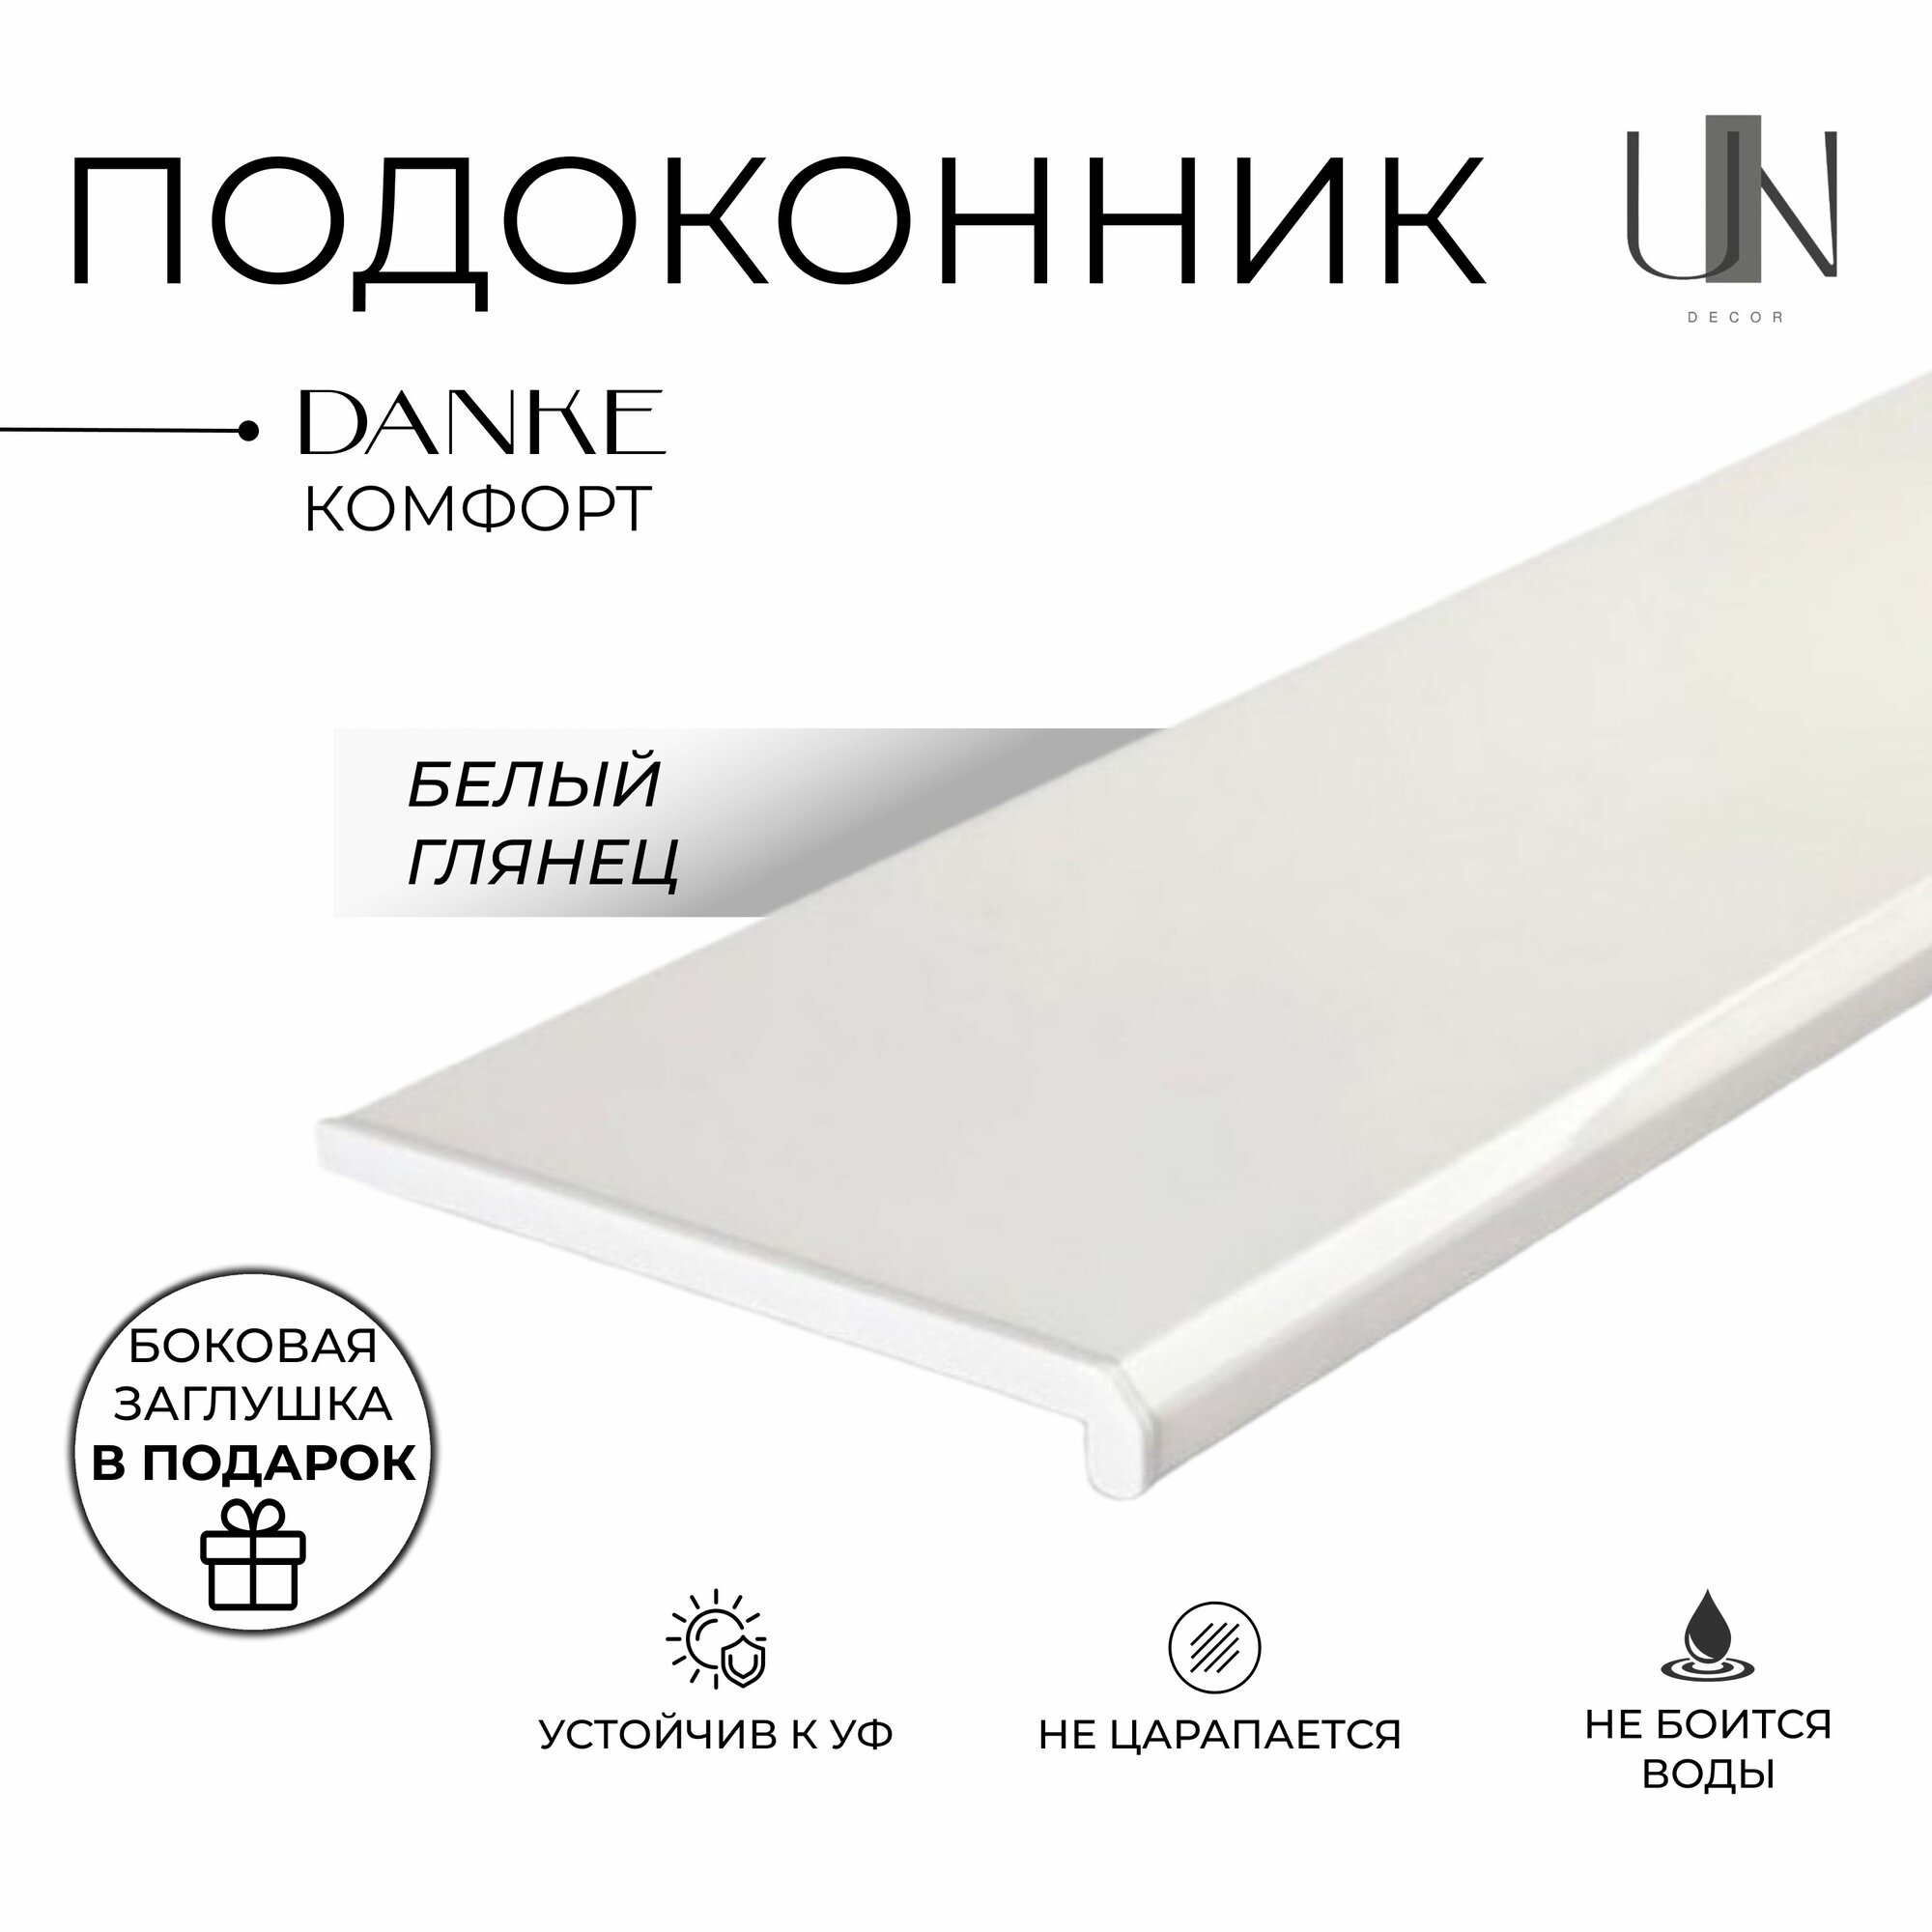 Подоконник Данке Белый глянцевый, коллекция DANKE KOMFORT 15 см х 1,5 м. пог.(150мм*1500мм)